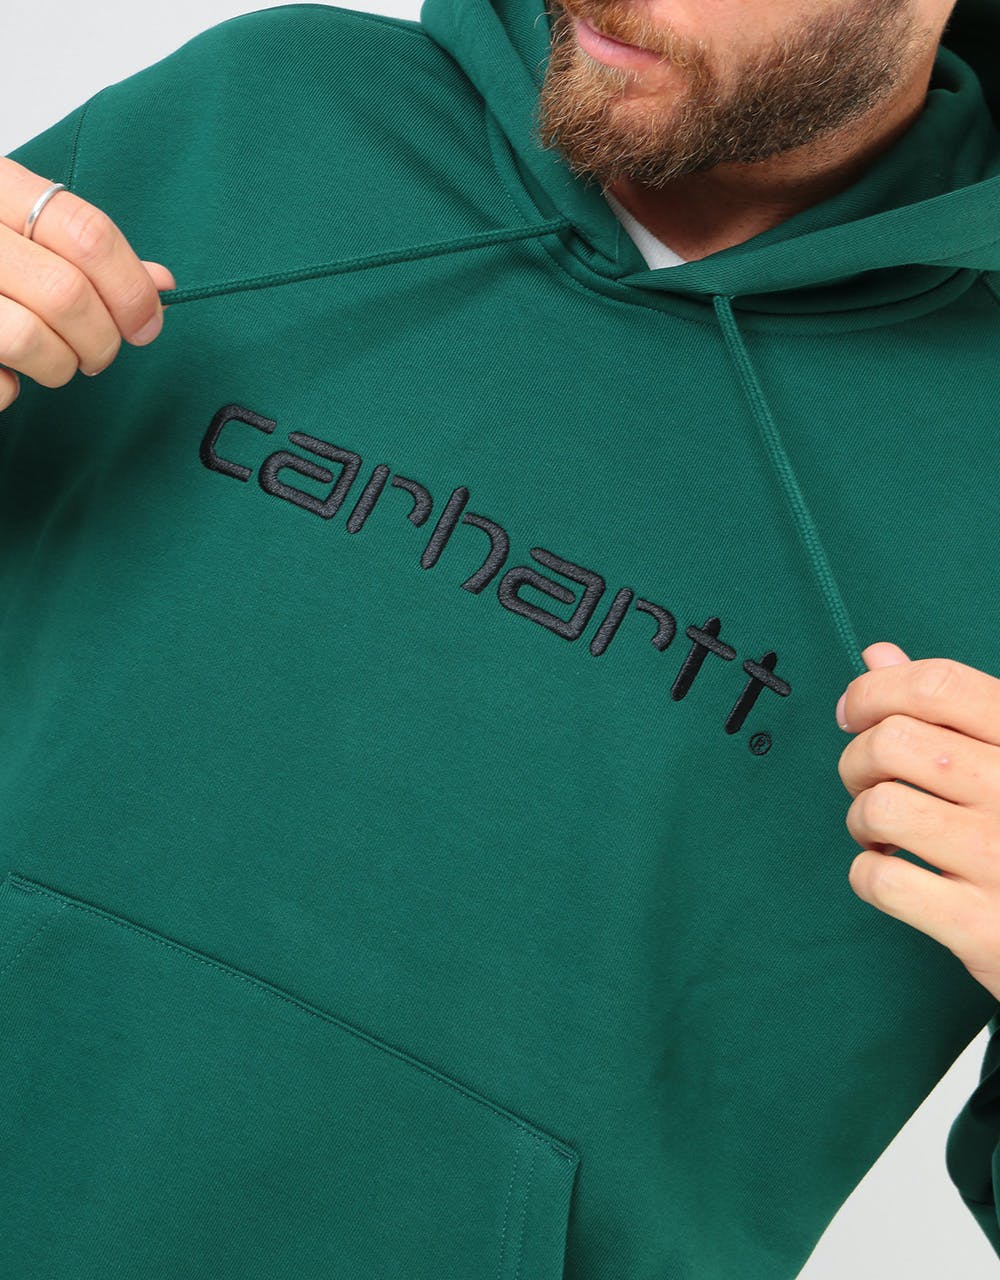 Carhartt WIP Hooded Sweatshirt - Dark Fir/Black